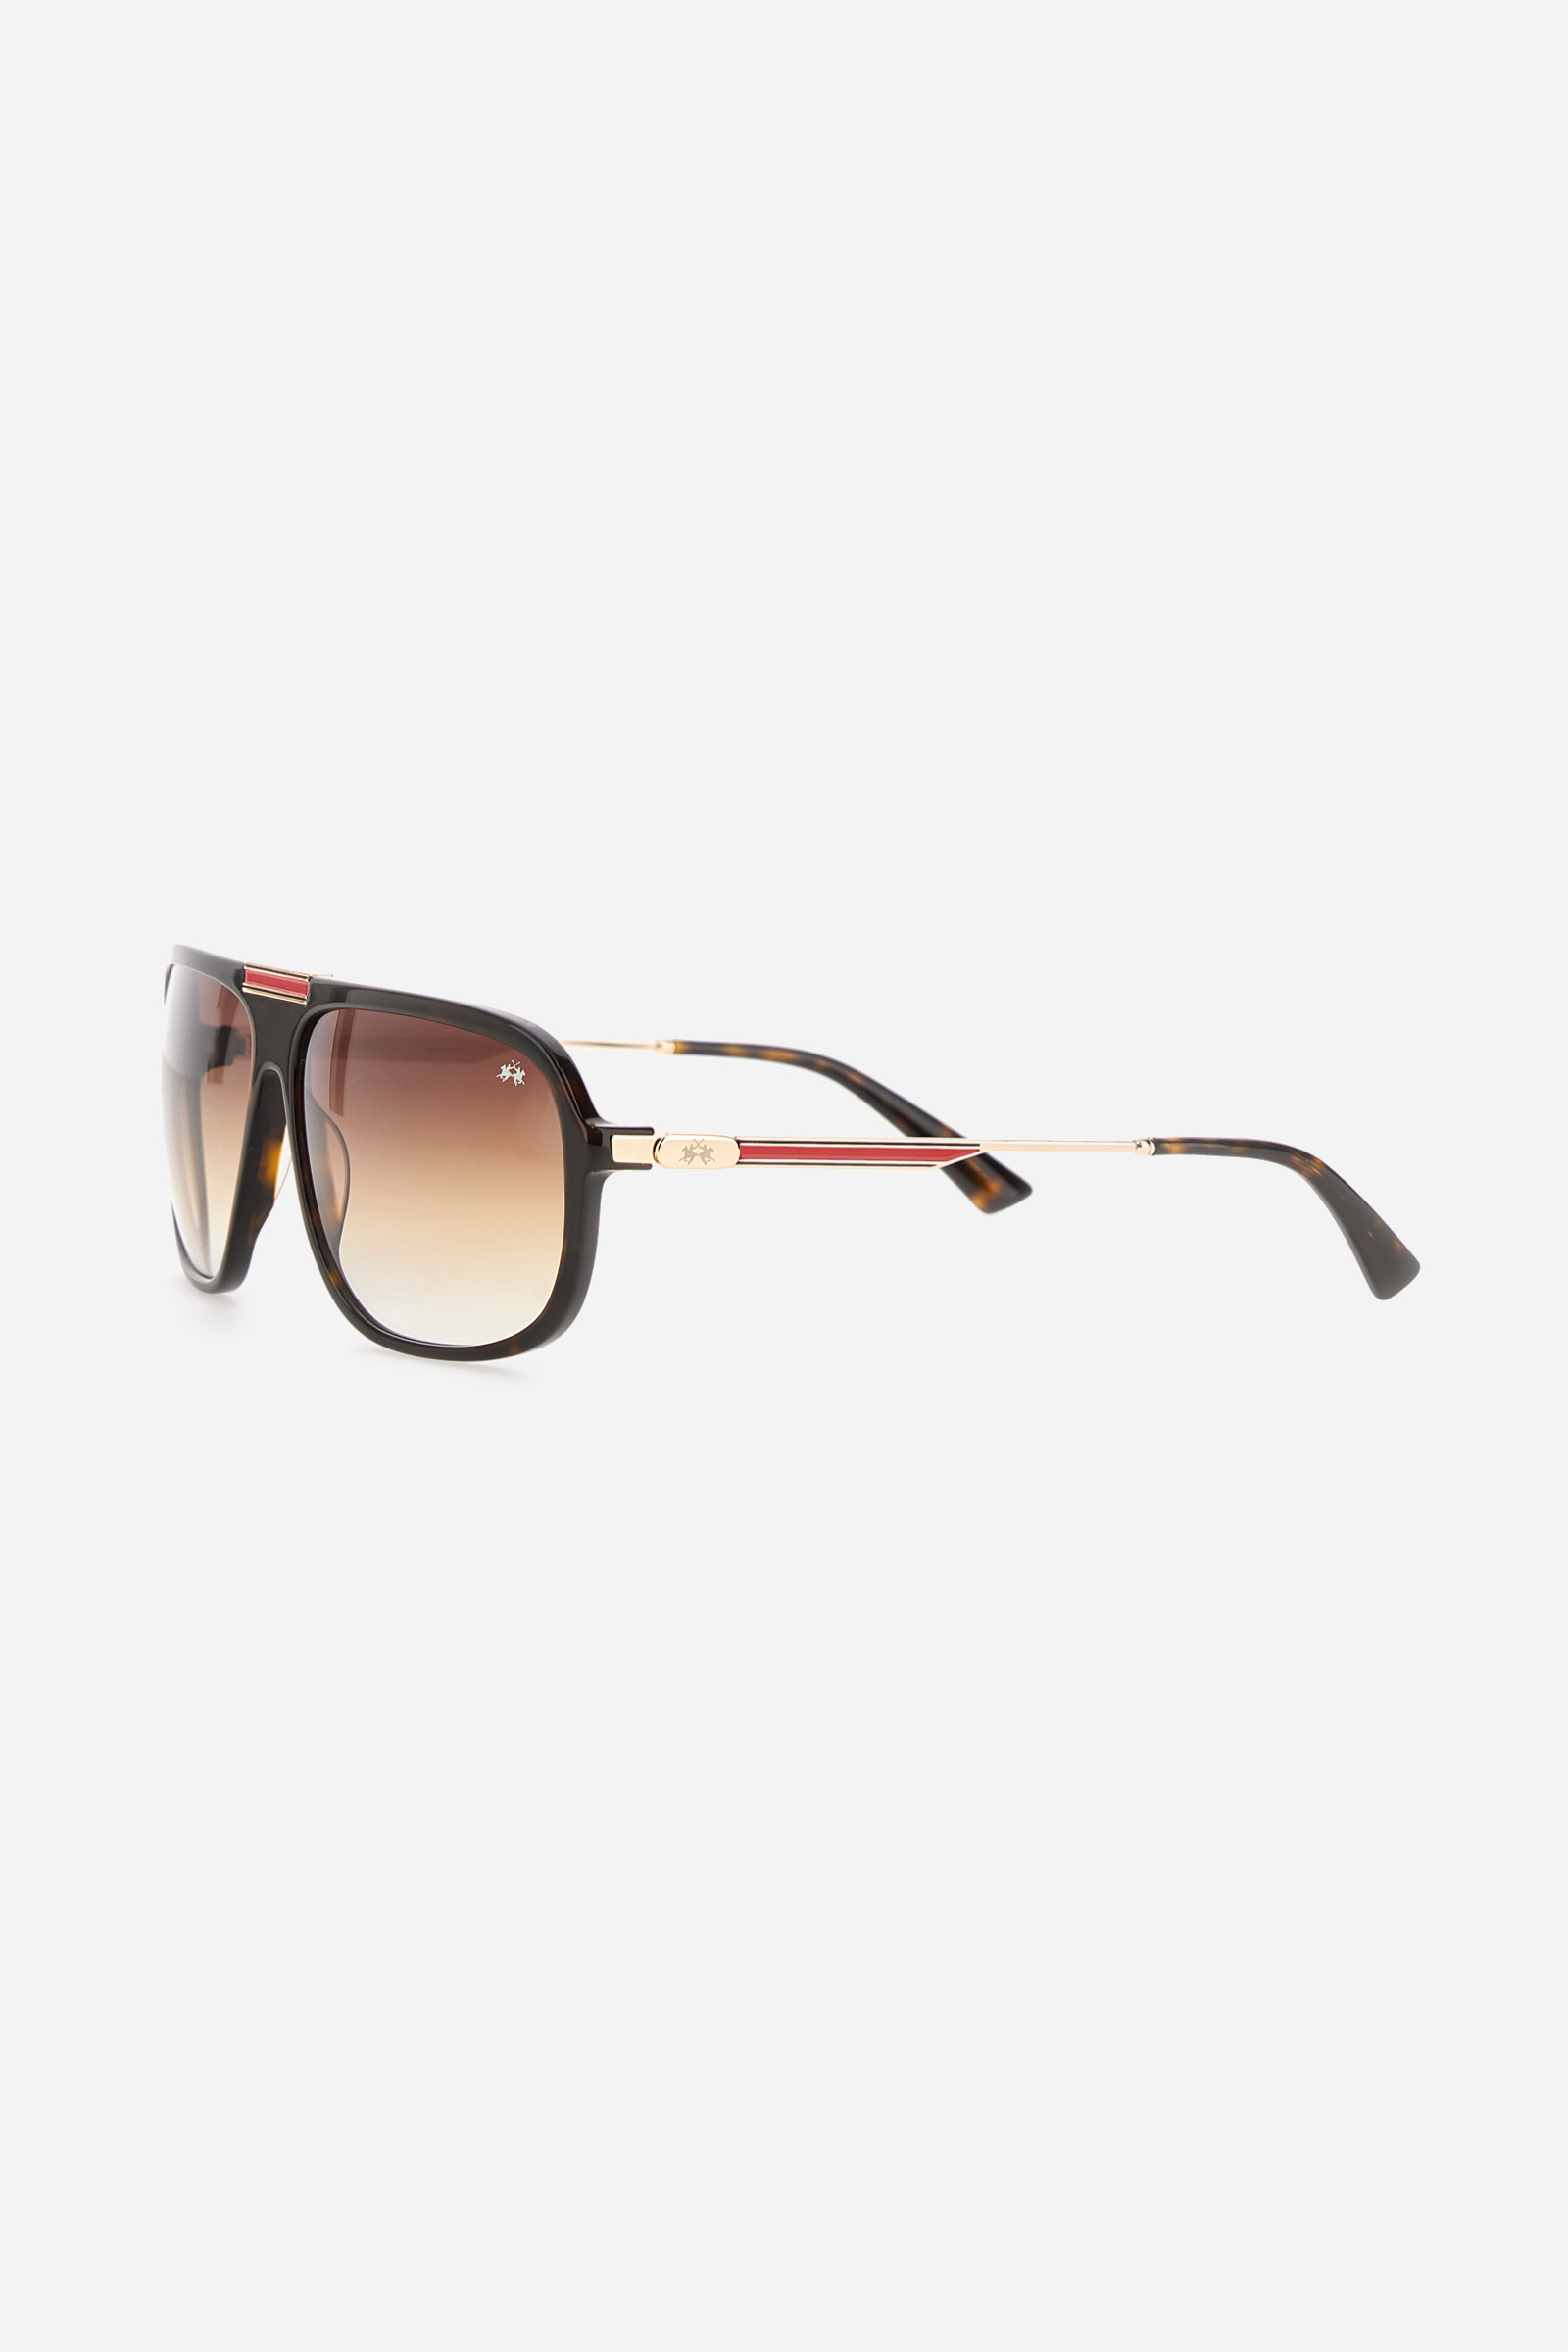 Shop Sunglasses style La | Online aviator Martina Avana Dark